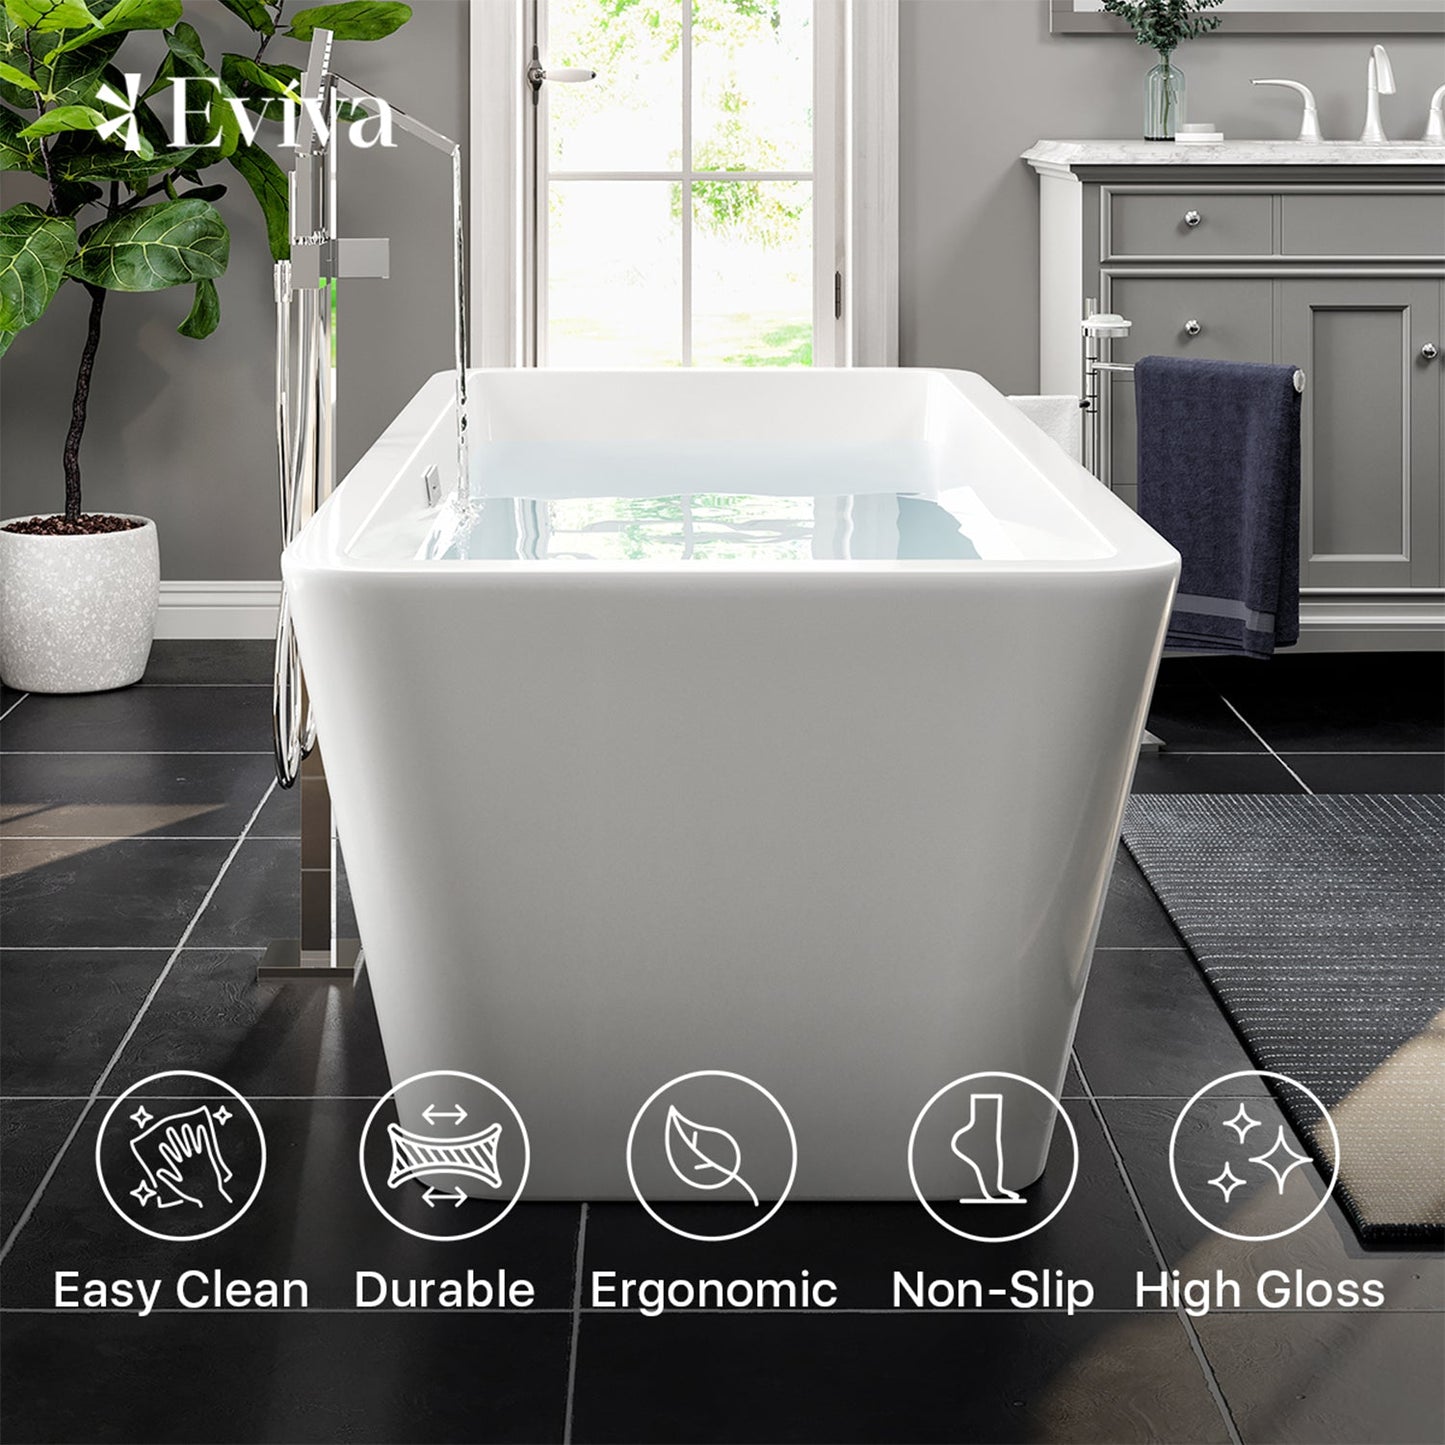 Eviva Aries 59 inch White Freestanding Bathtub